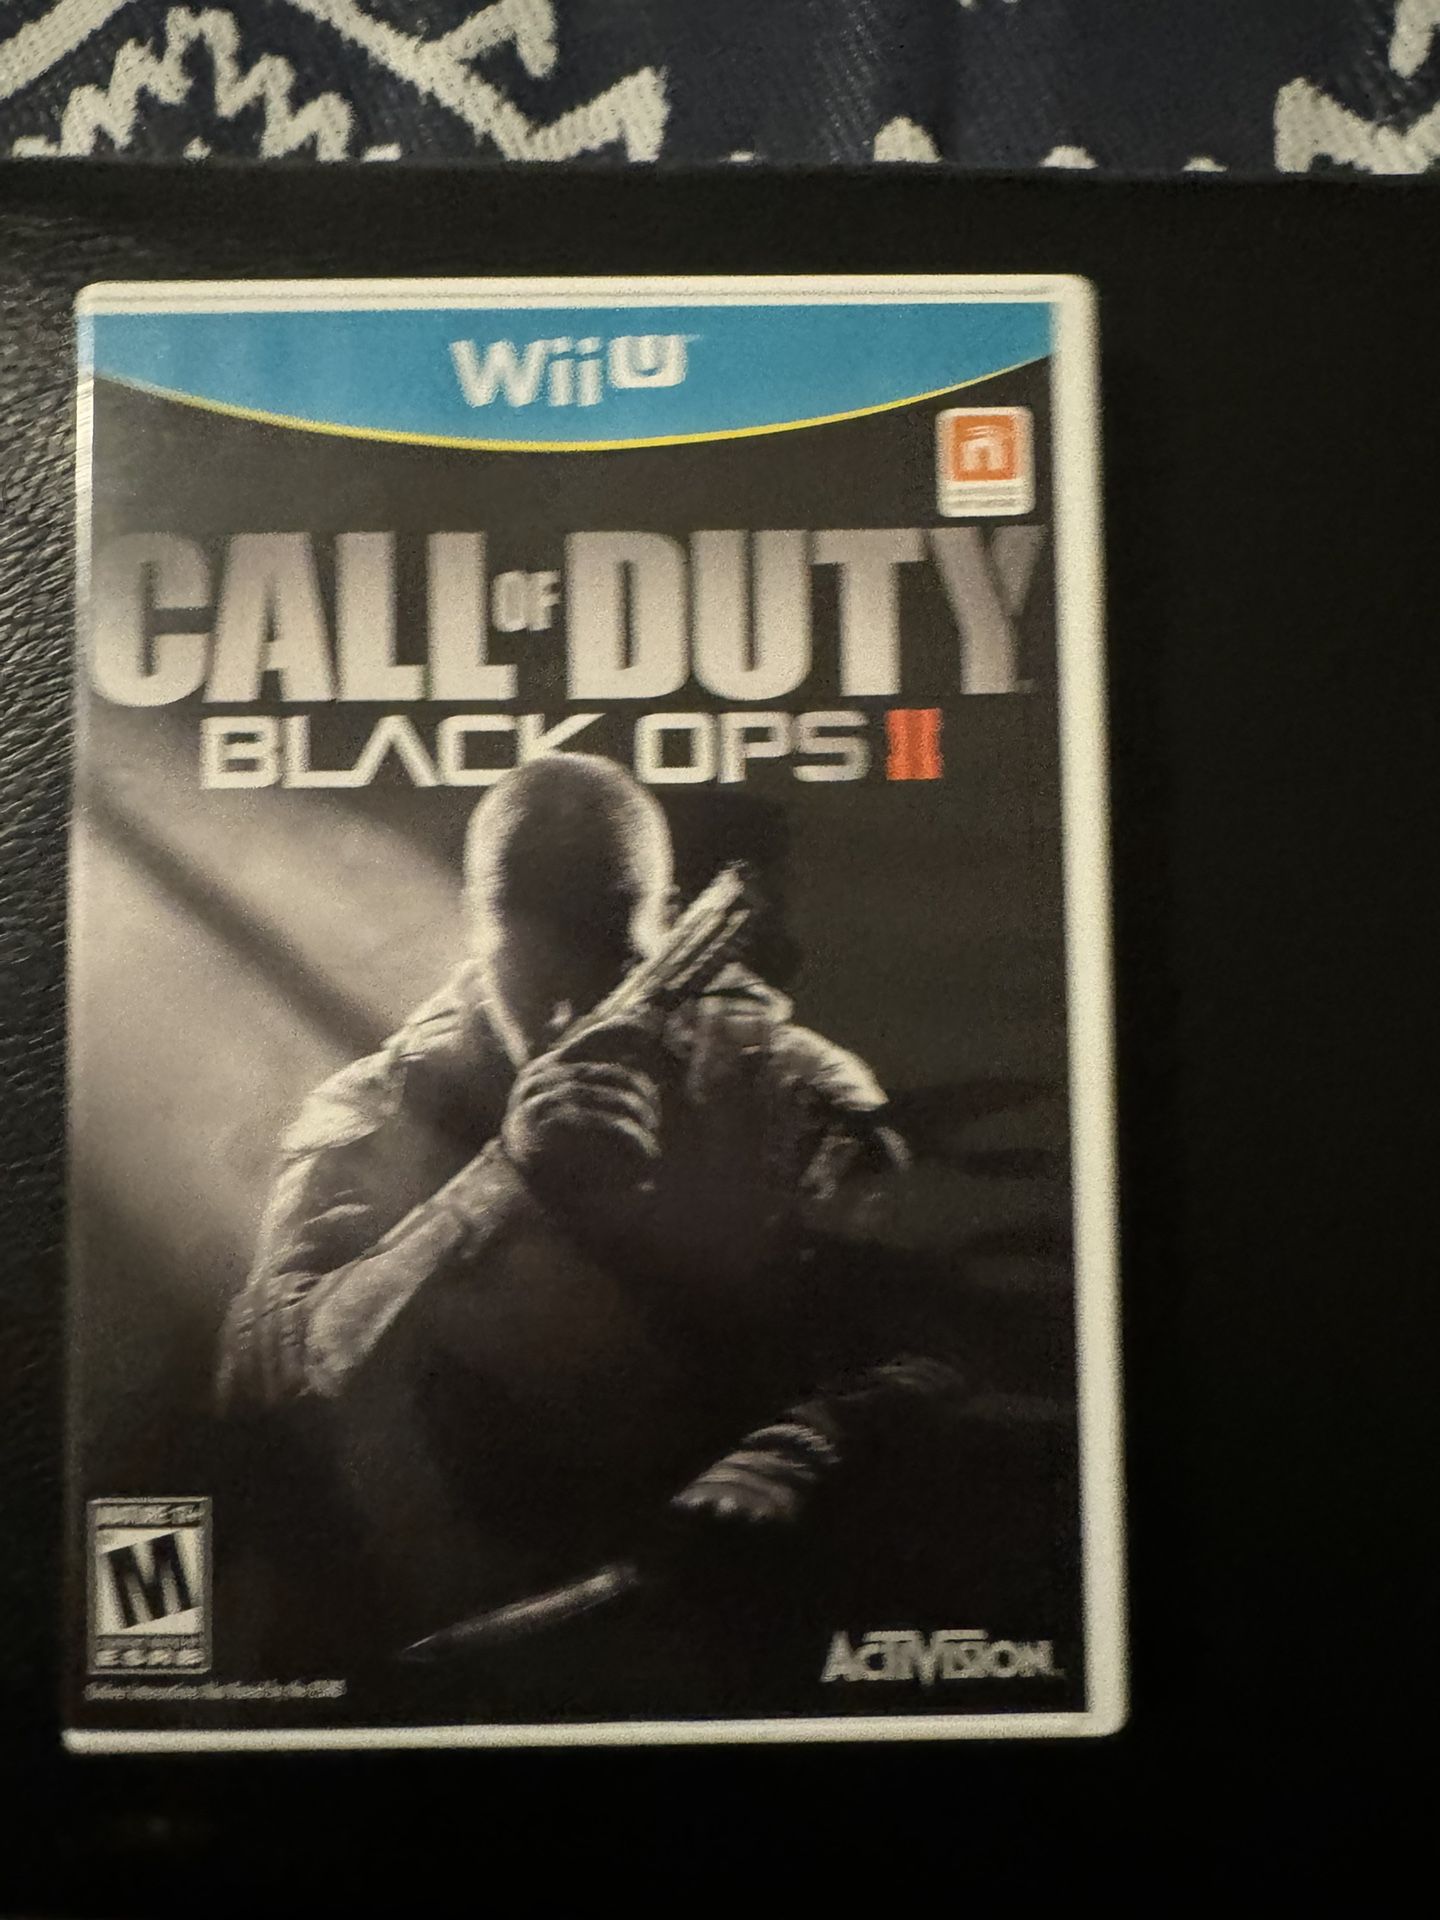 Call of Duty black ops Nintendo Wii U